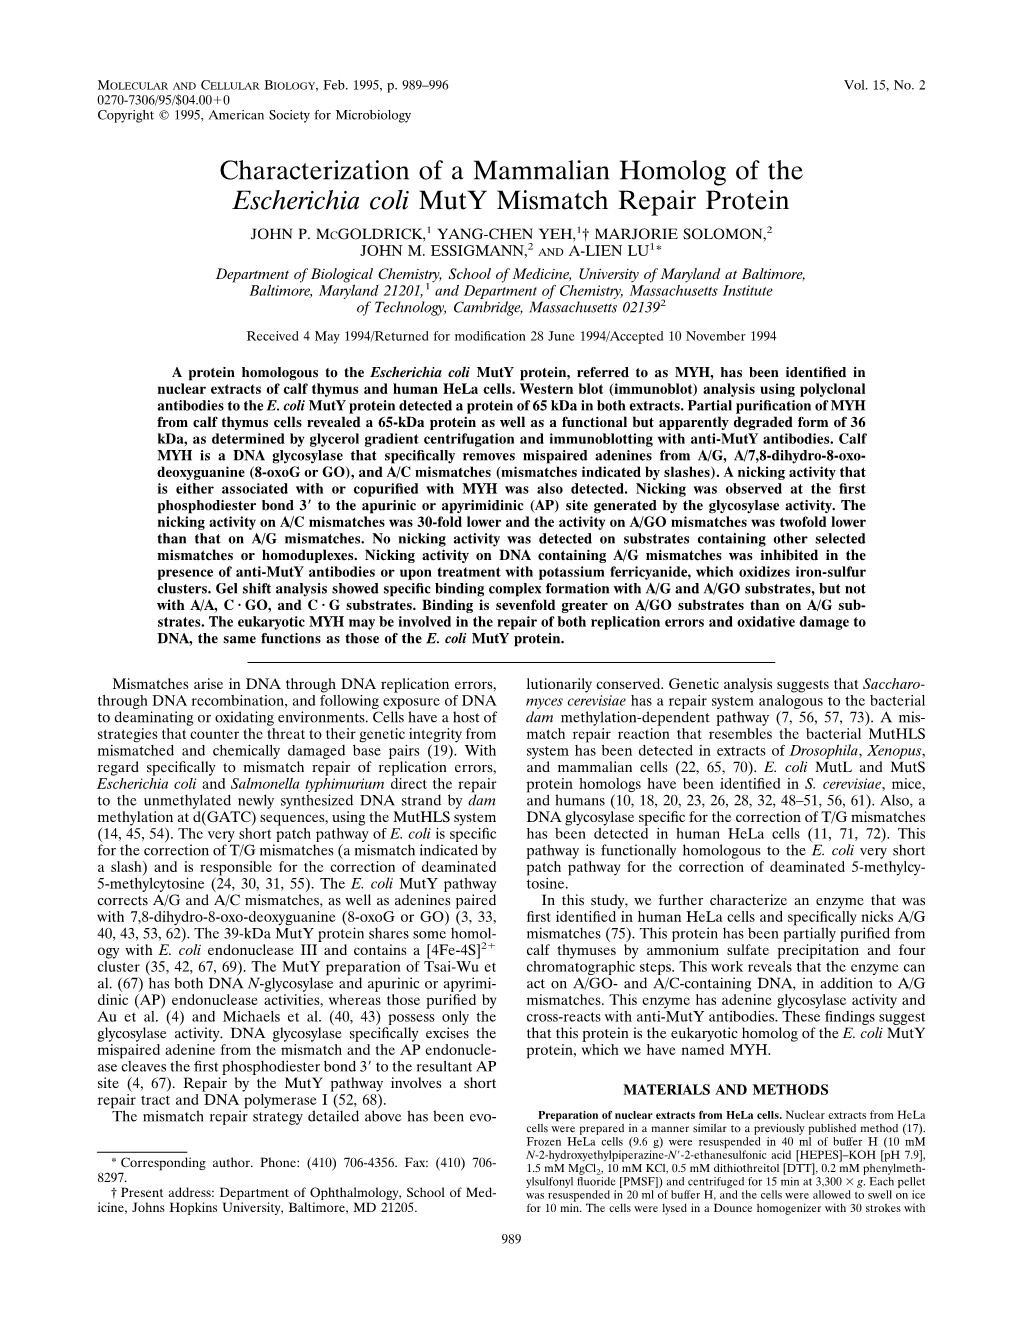 Characterization of a Mammalian Homolog of the Escherichia Coli Muty Mismatch Repair Protein